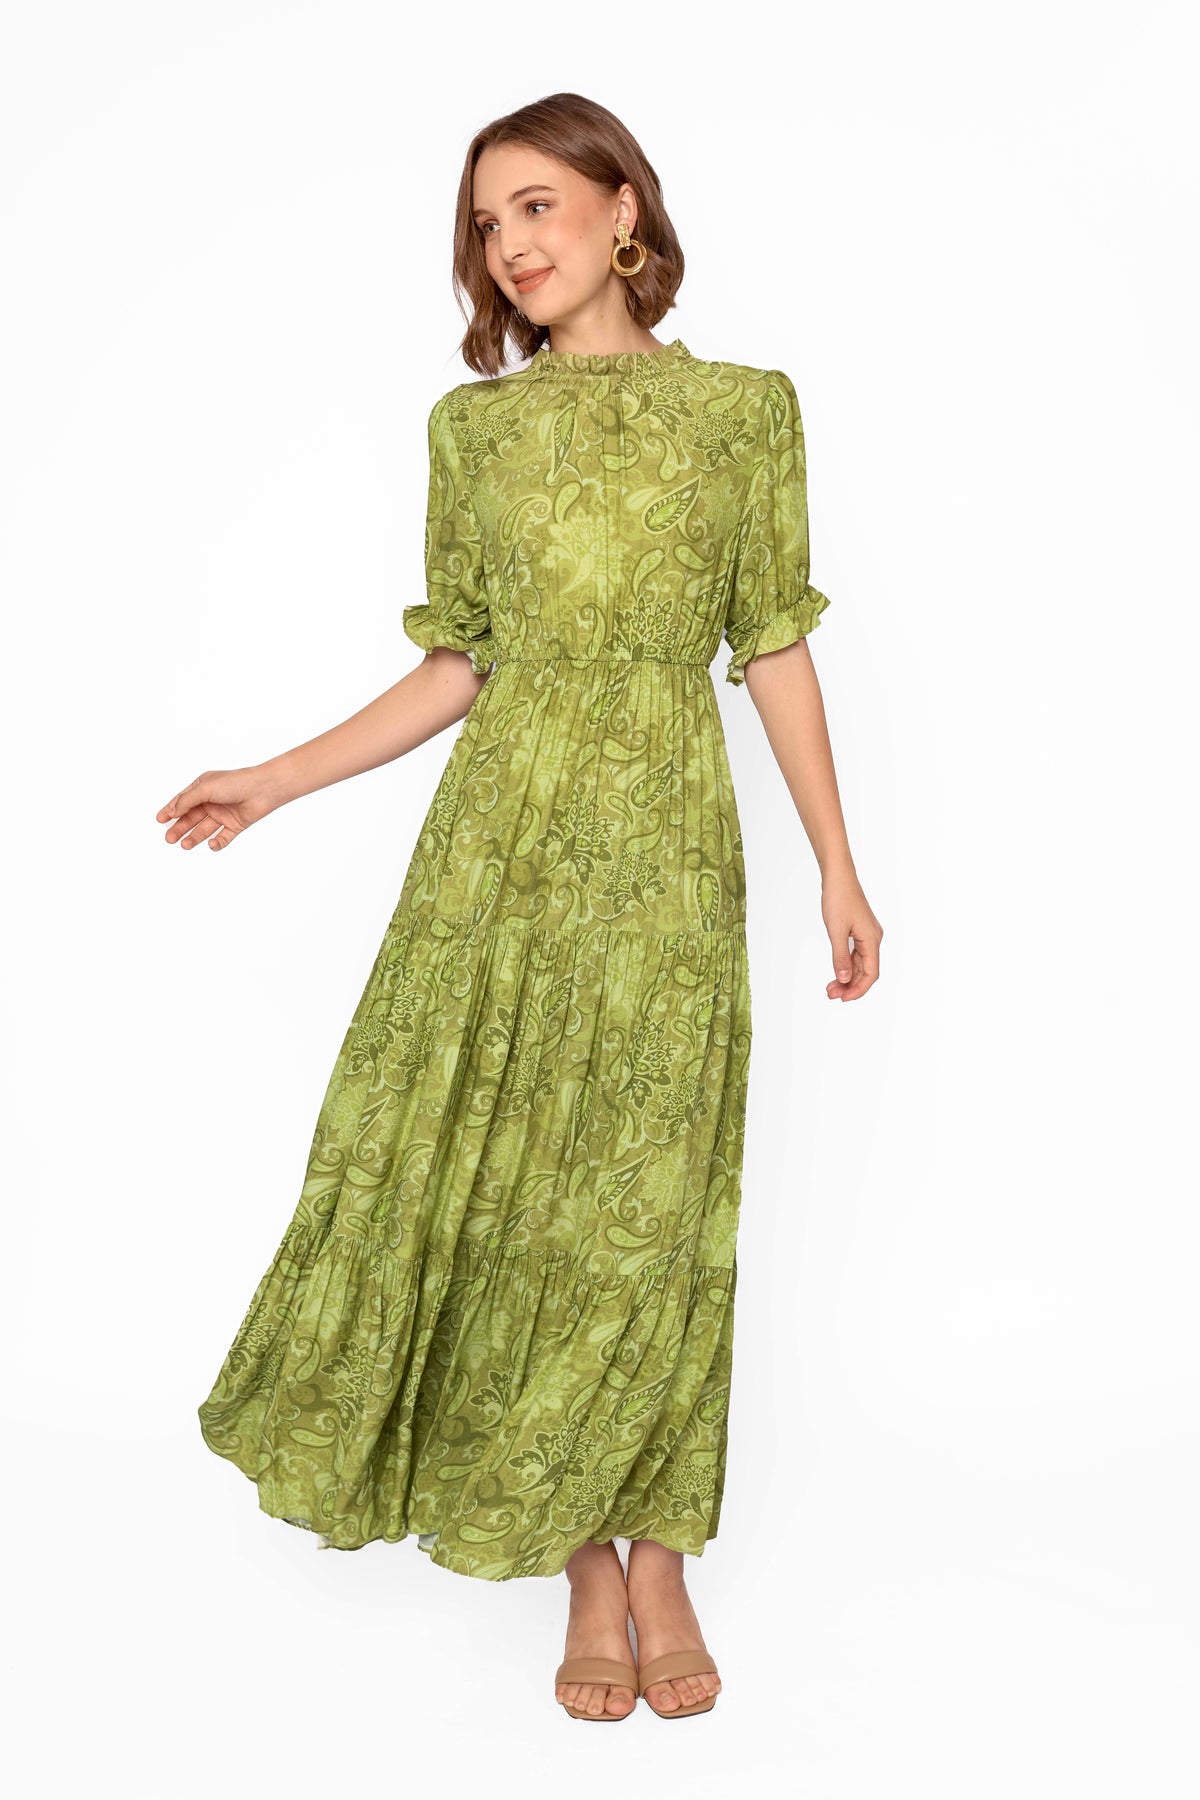 VELA Dress in Green Pakis